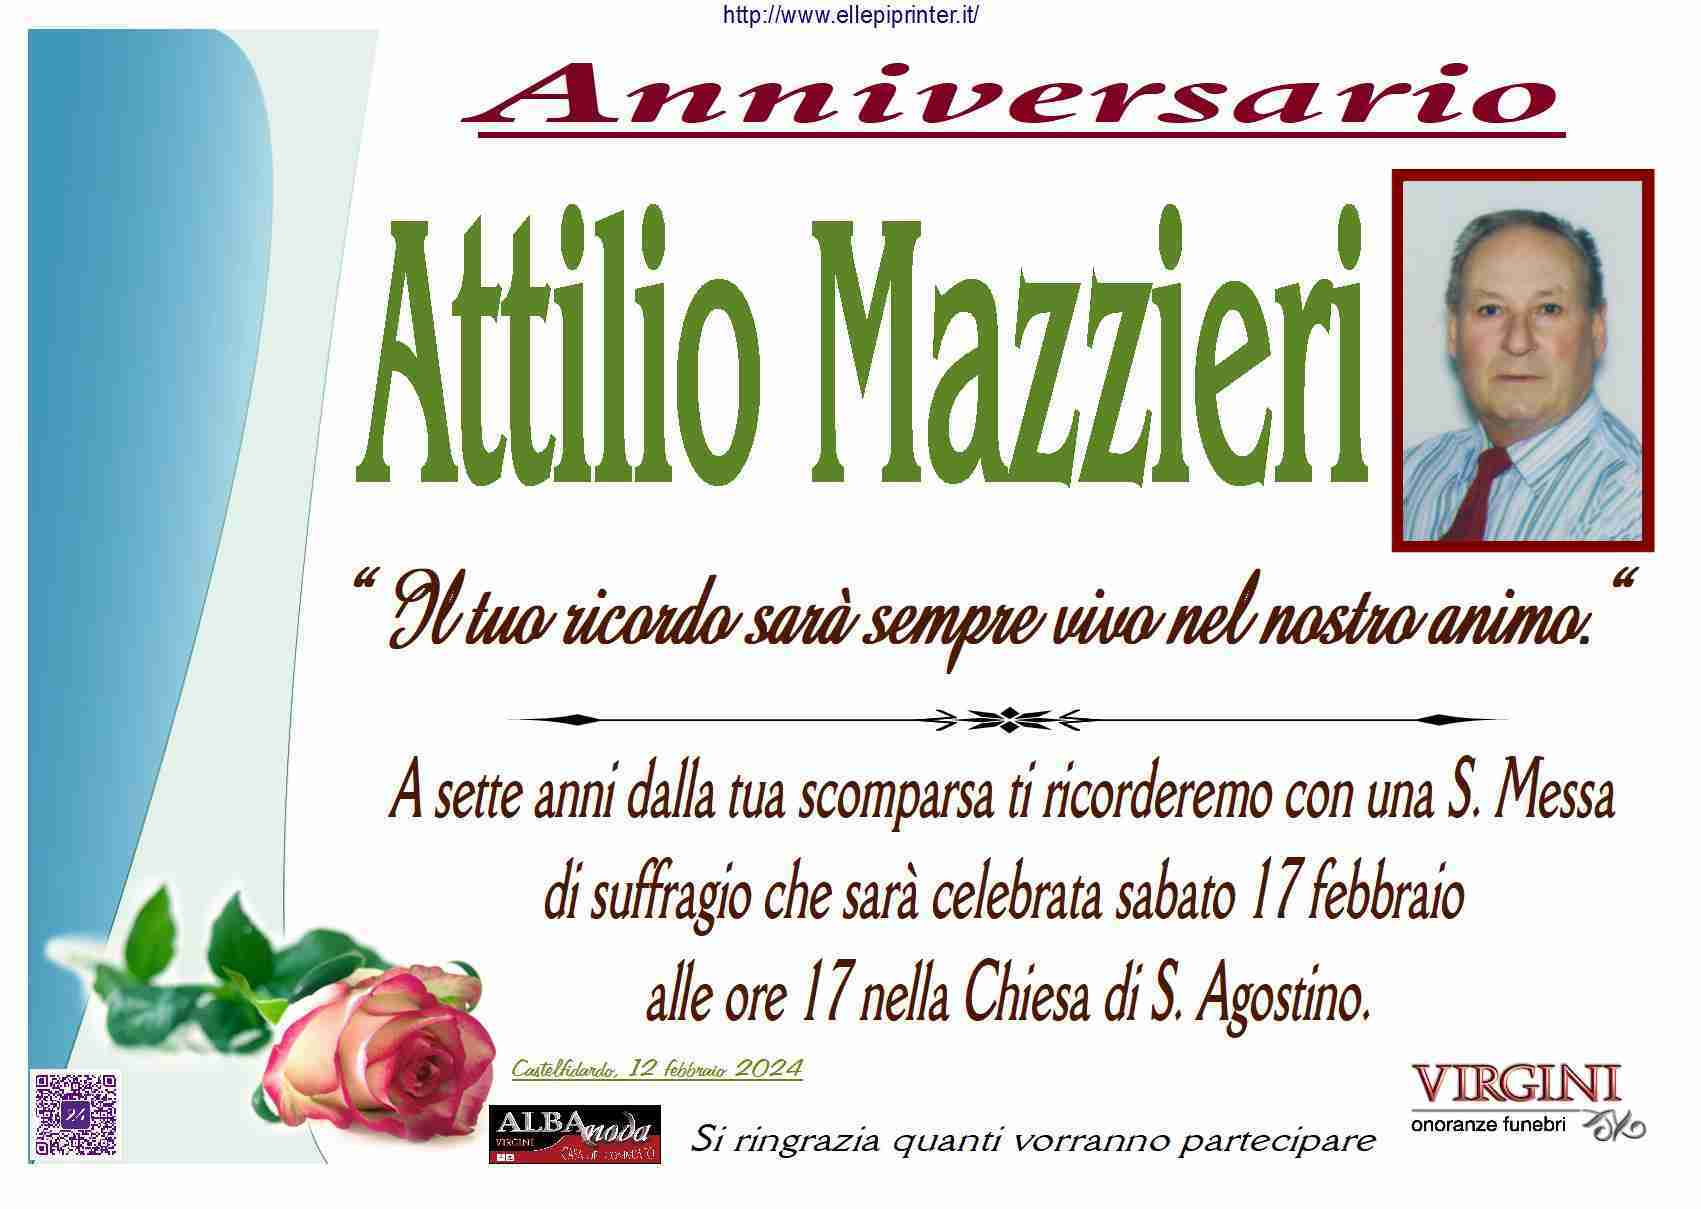 Attilio Mazzieri